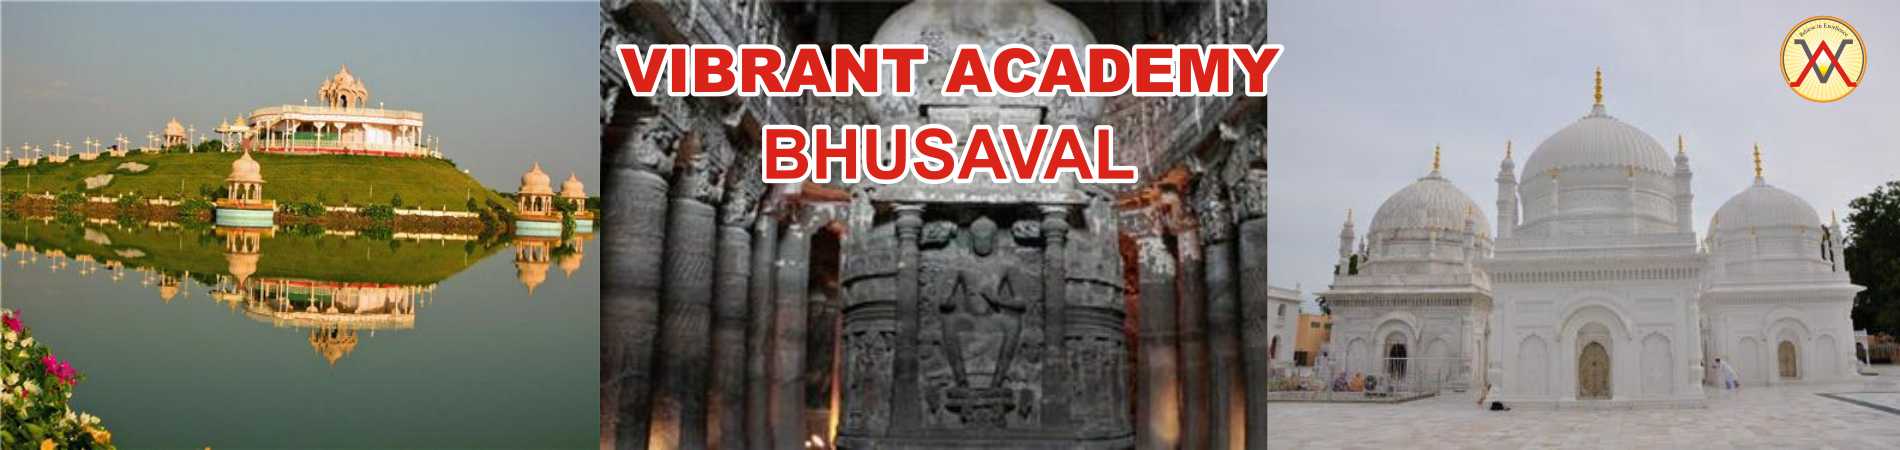 Vibrant Academy Bhusaval